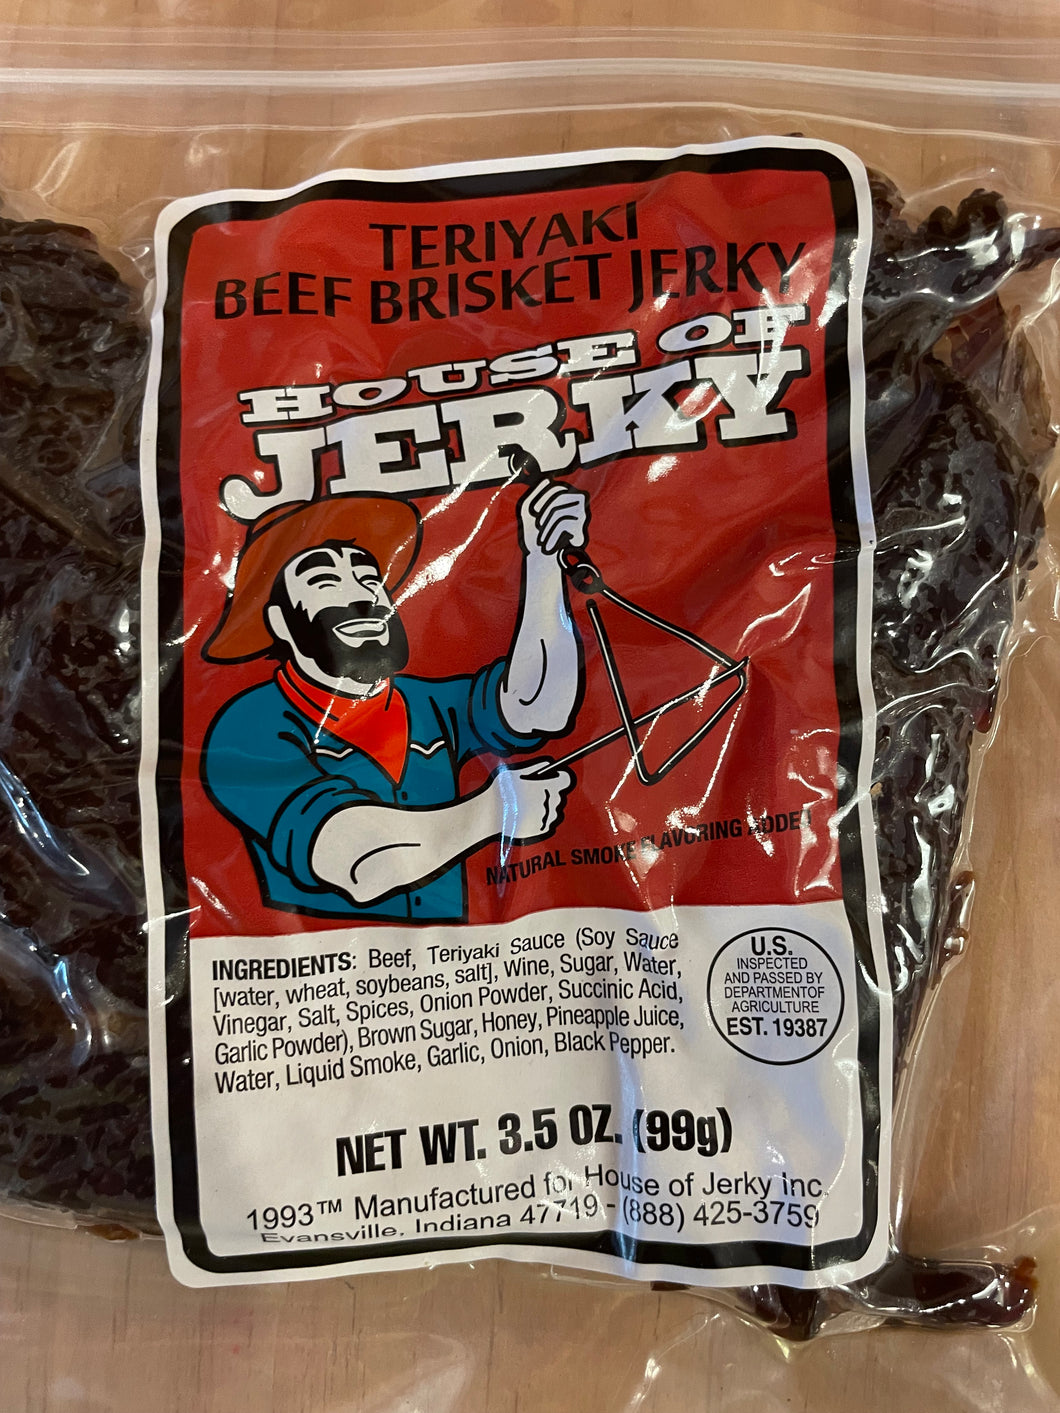 Brisket - Teriyaki Beef jerky